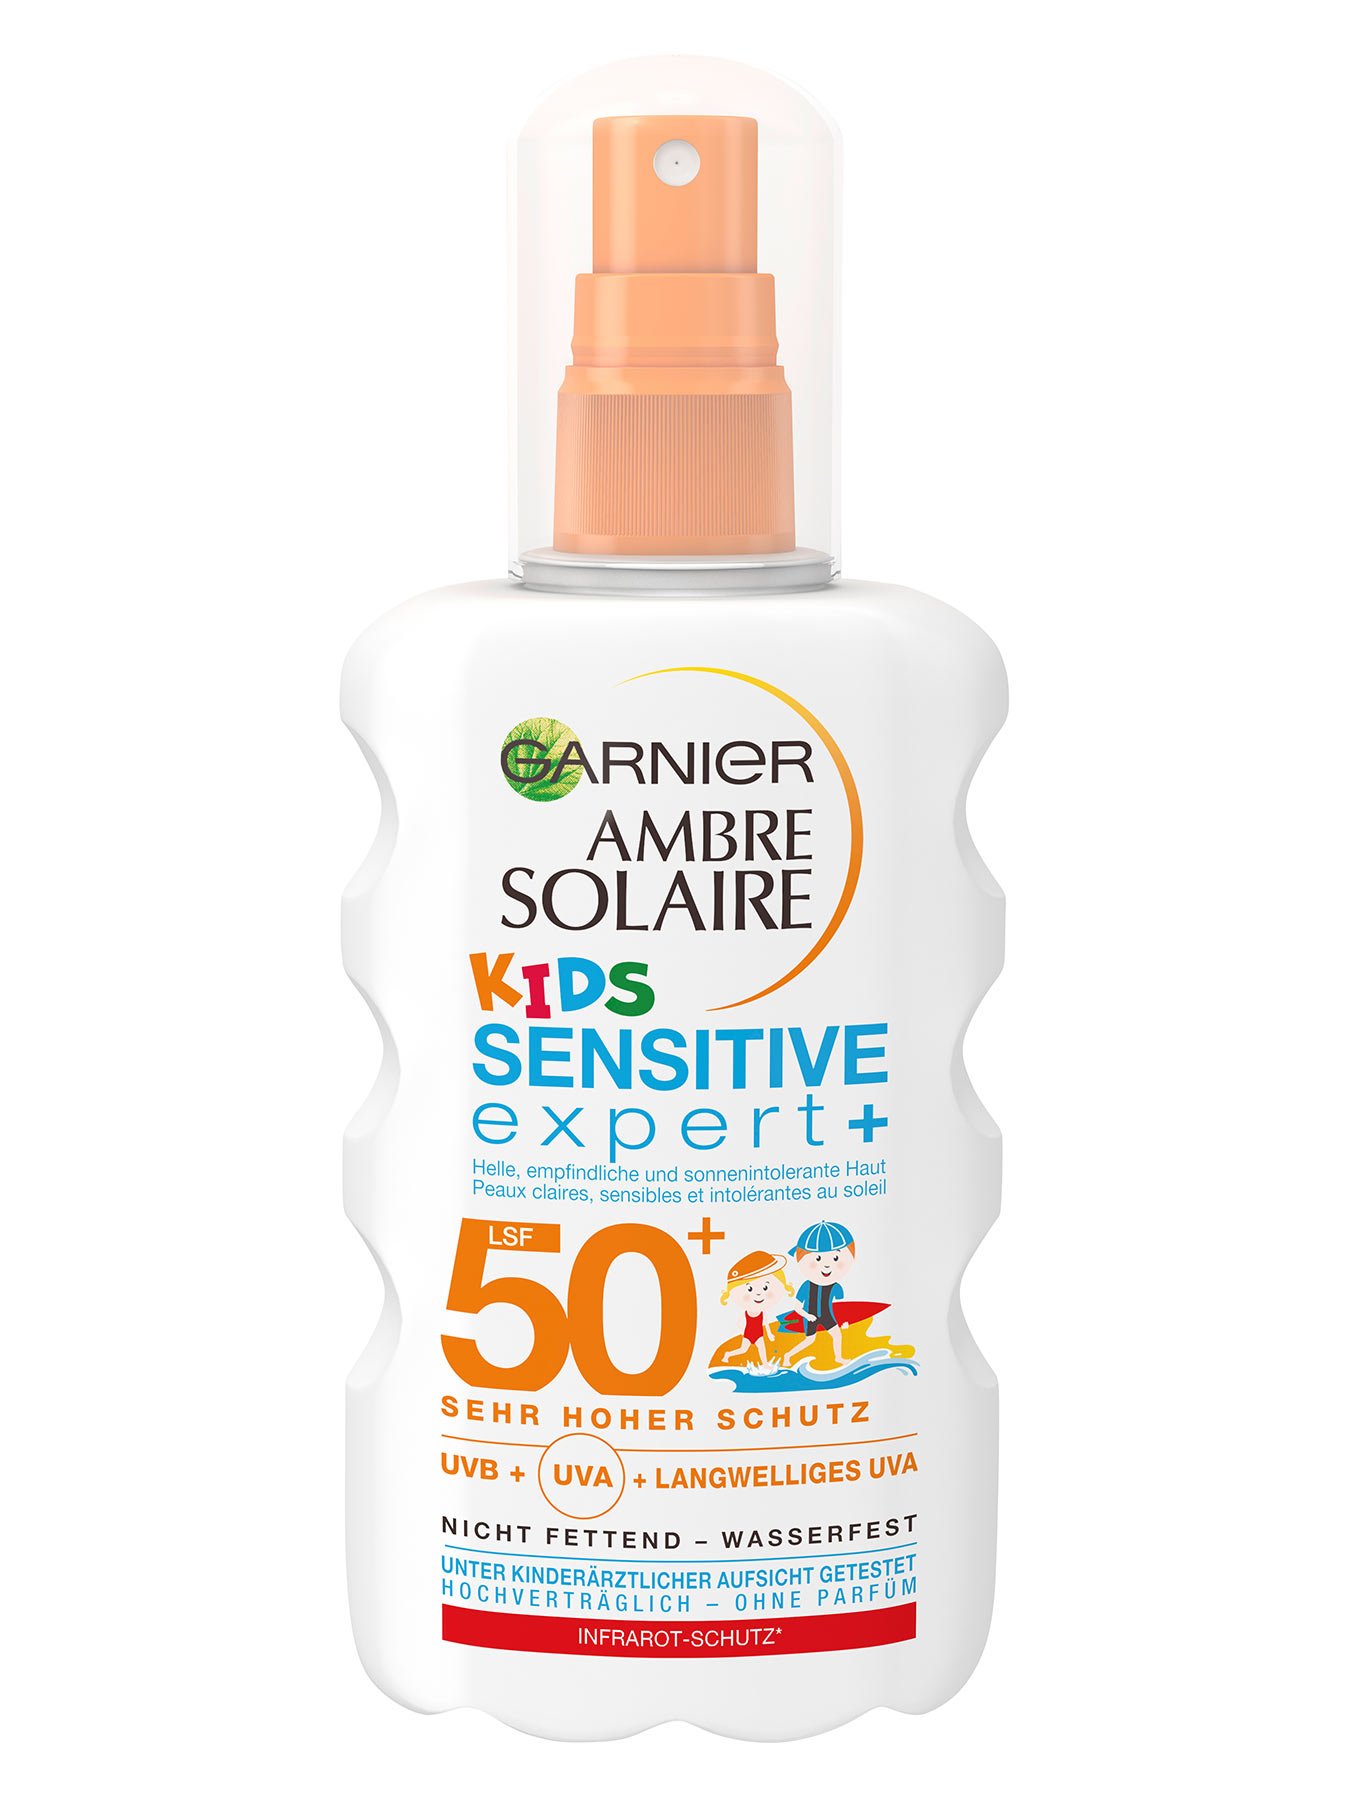 Sensitive Kids Garnier | 50+ FPS expert+ Spray